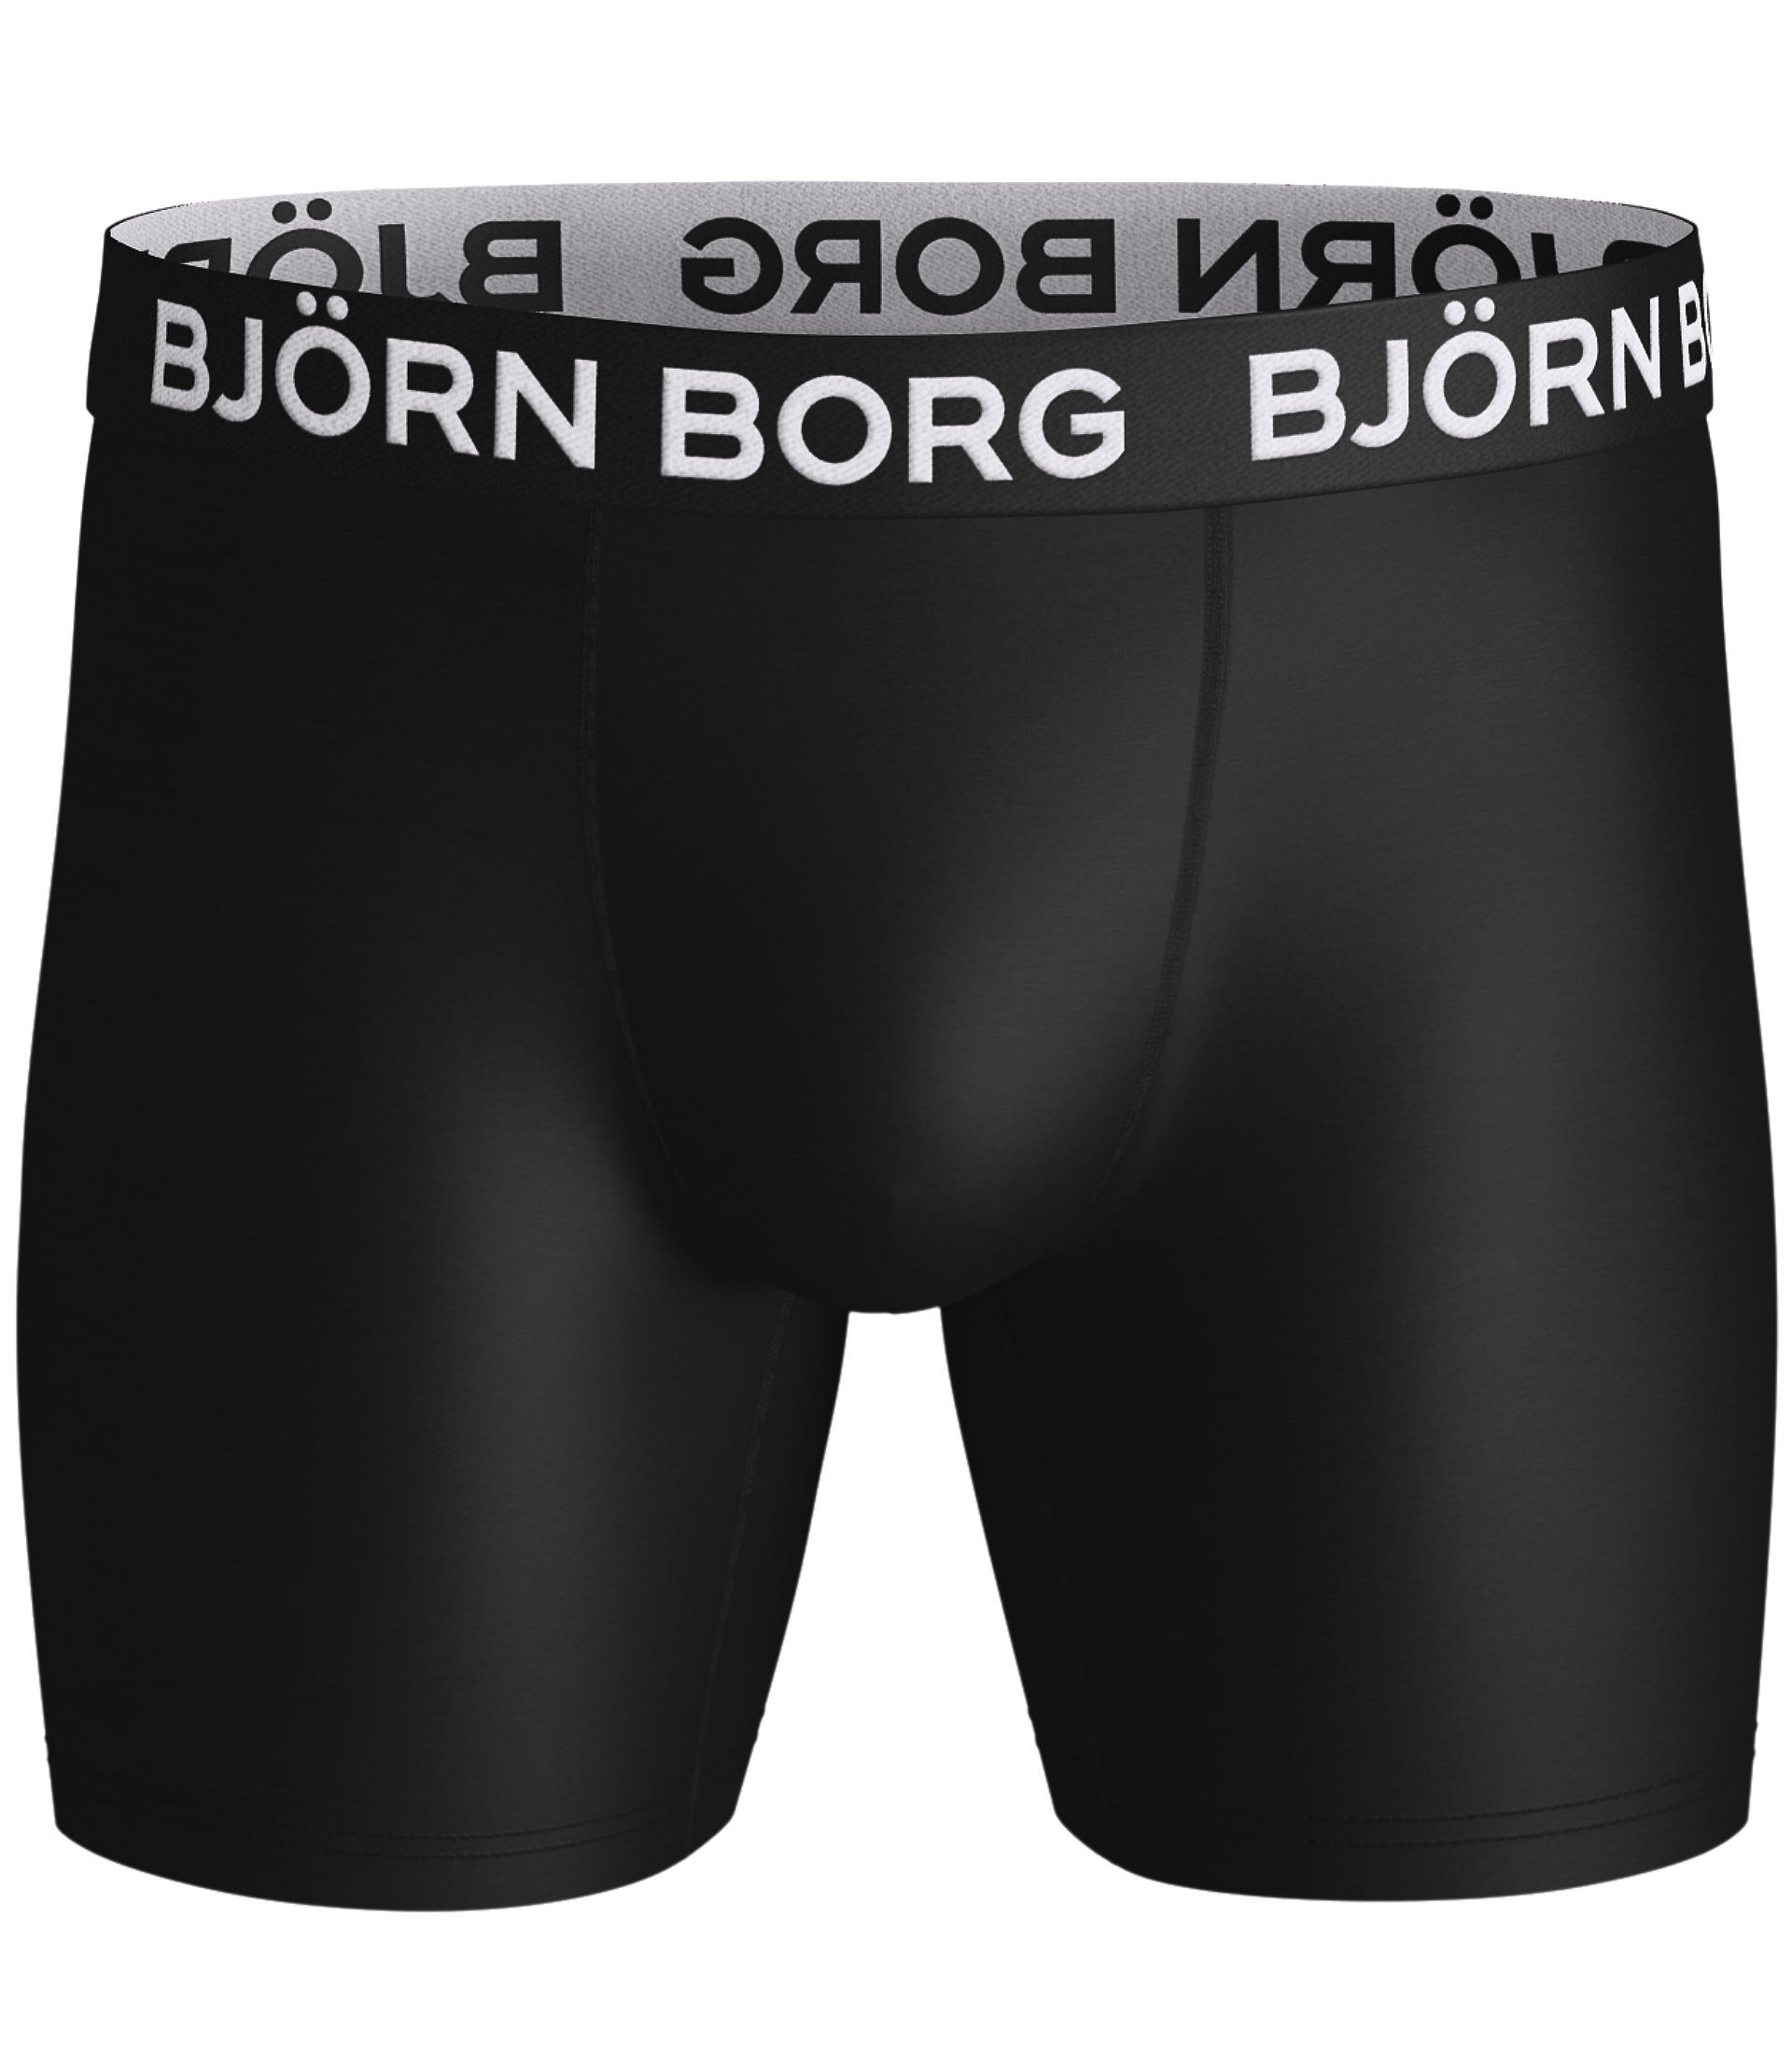 Bjorn Borg x MTV Get It On Underwear Campaign | Michael 84